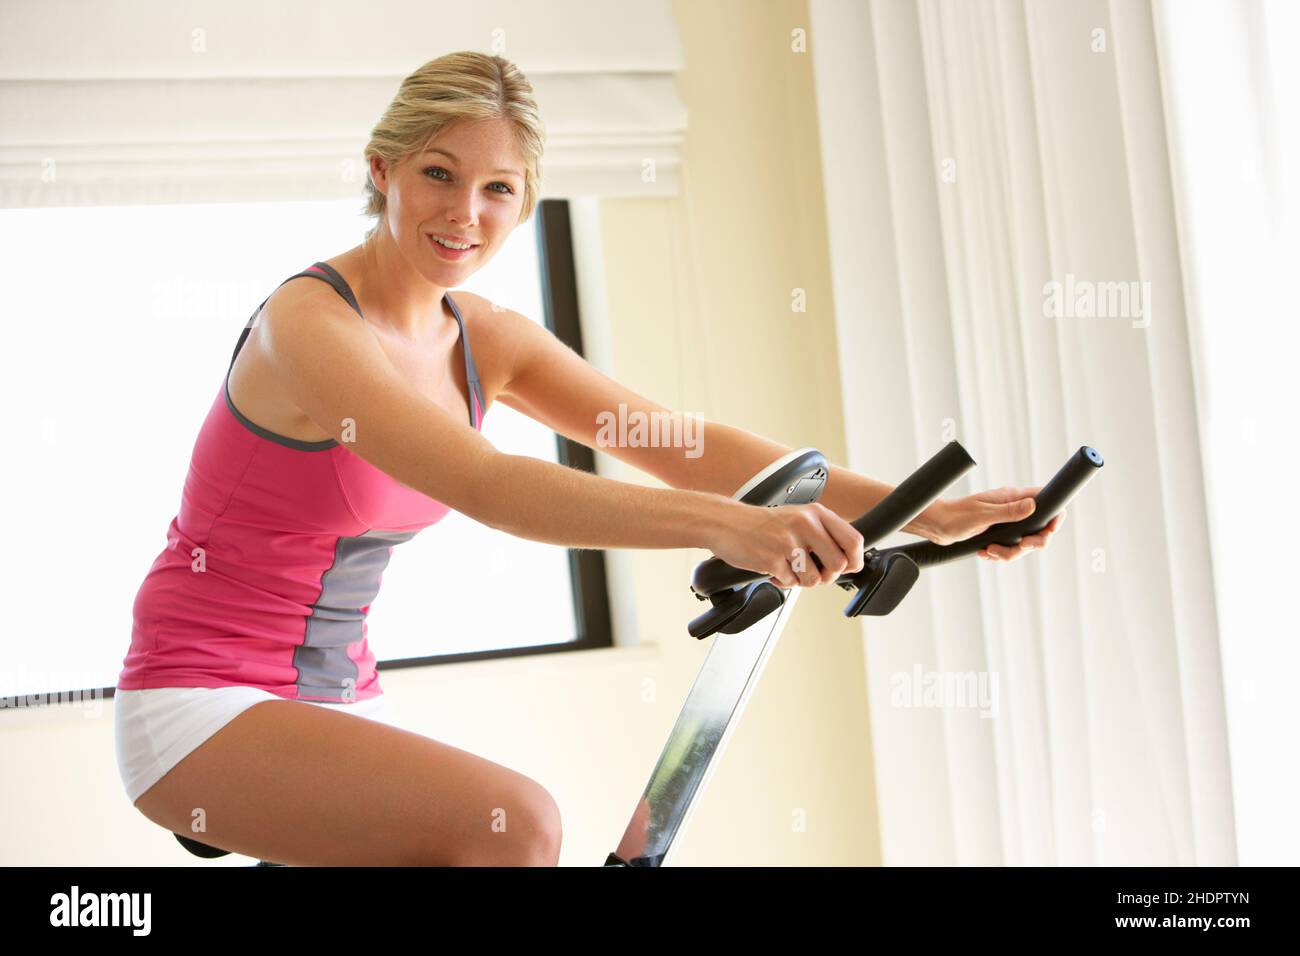 young woman, exercise bike, girl, girls, woman, young women, exercise bikes Stock Photo